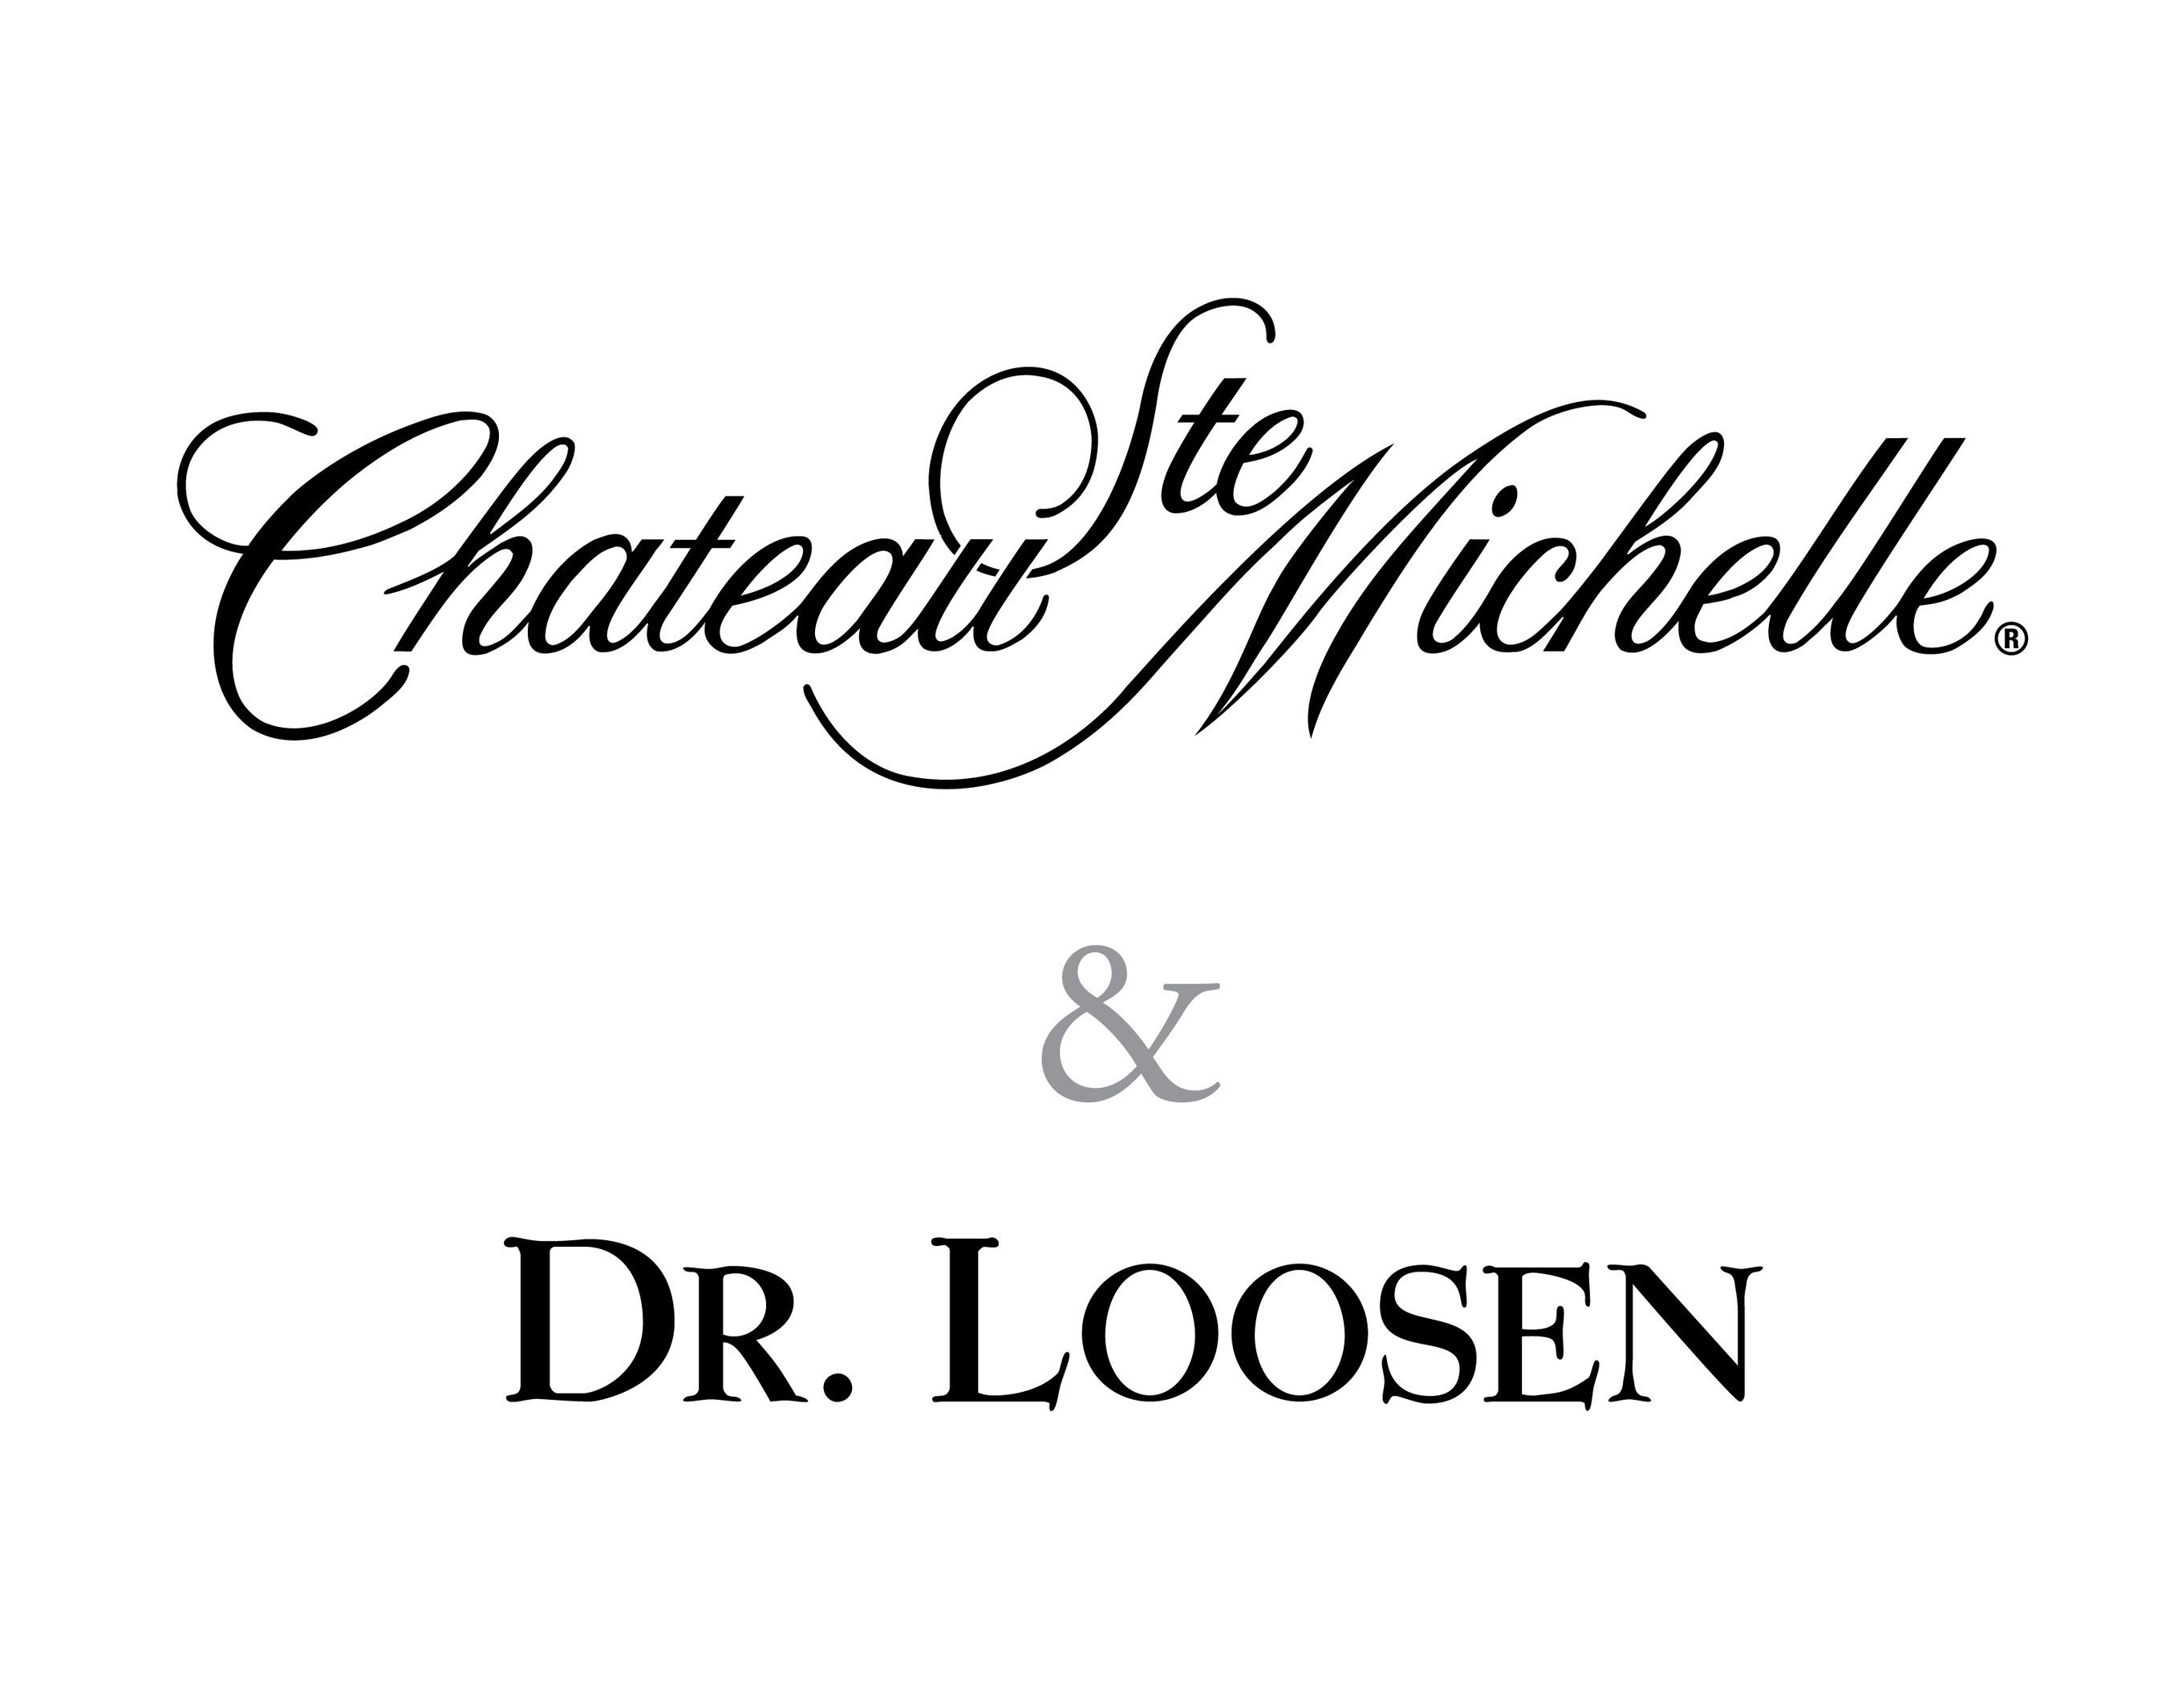 Chateau Ste. Michelle & Dr. Loosen Logo